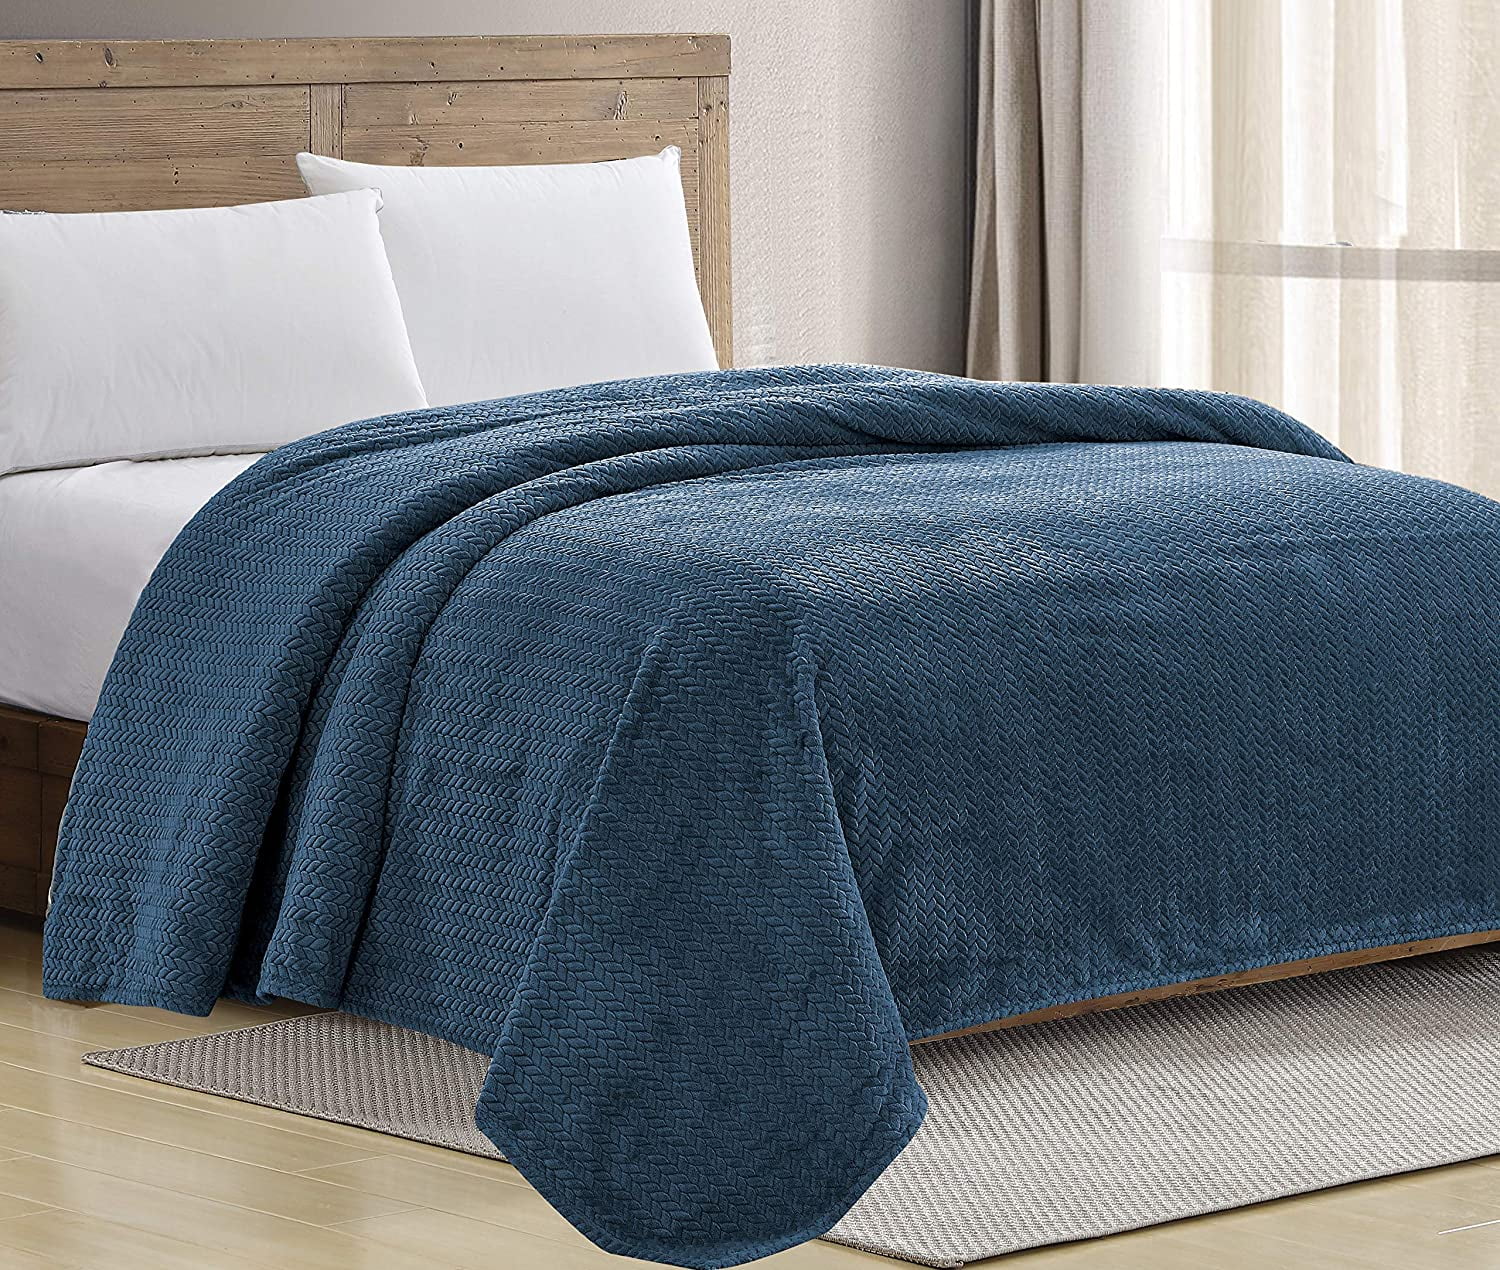 Chevron Braided Blanket 108, King Bed Blanket